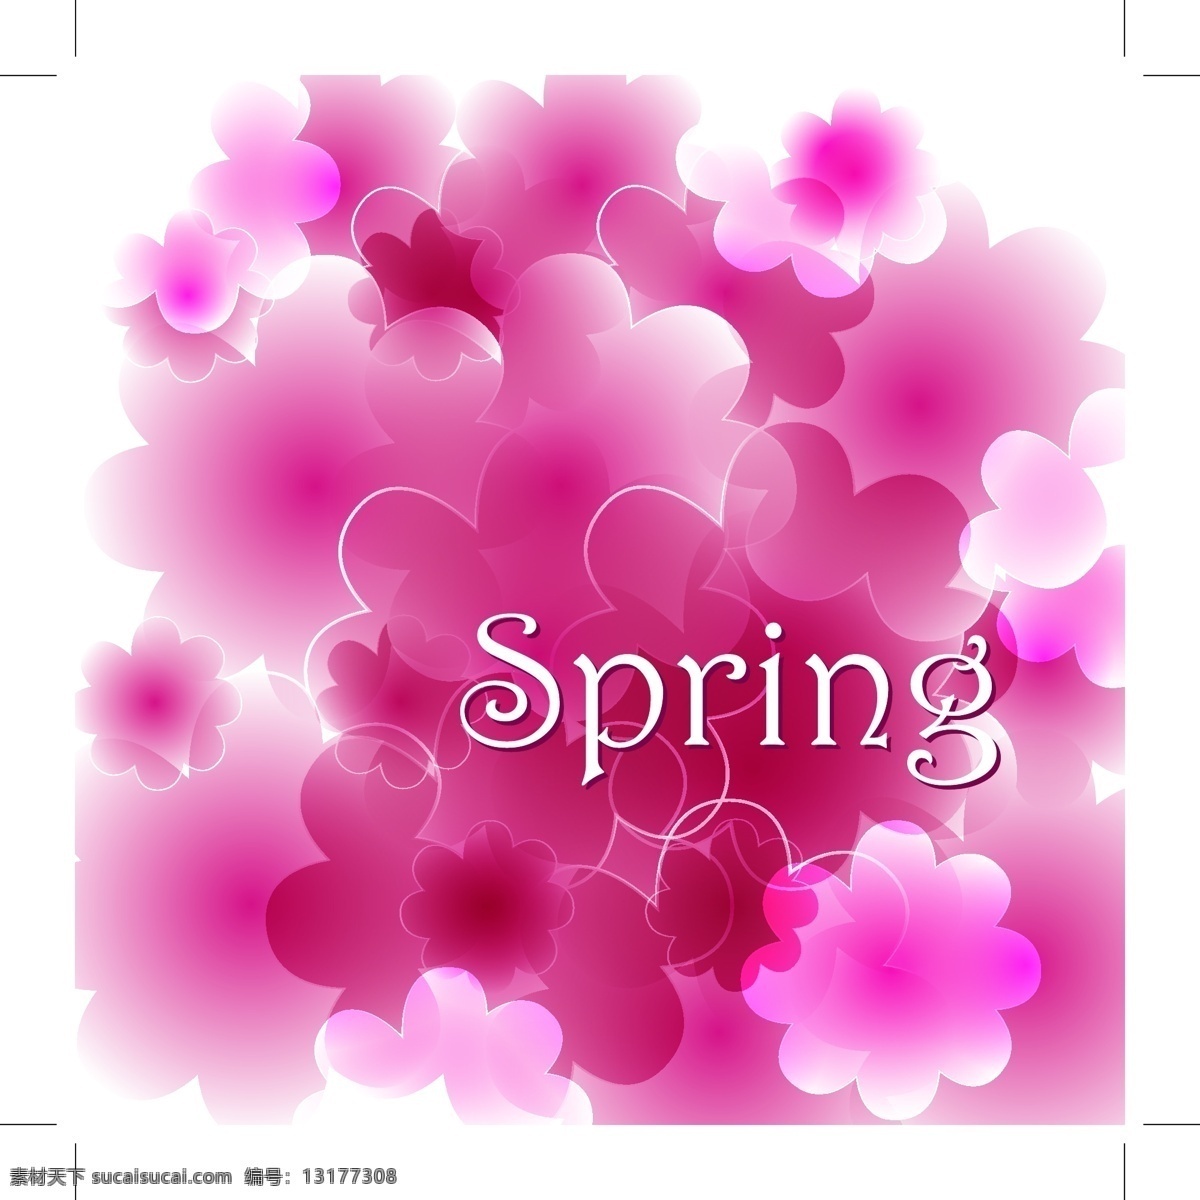 spring 春天 概念 线条 树叶 绿叶 免费 背景 矢量 叶子 圆点 花朵 图 矢量图